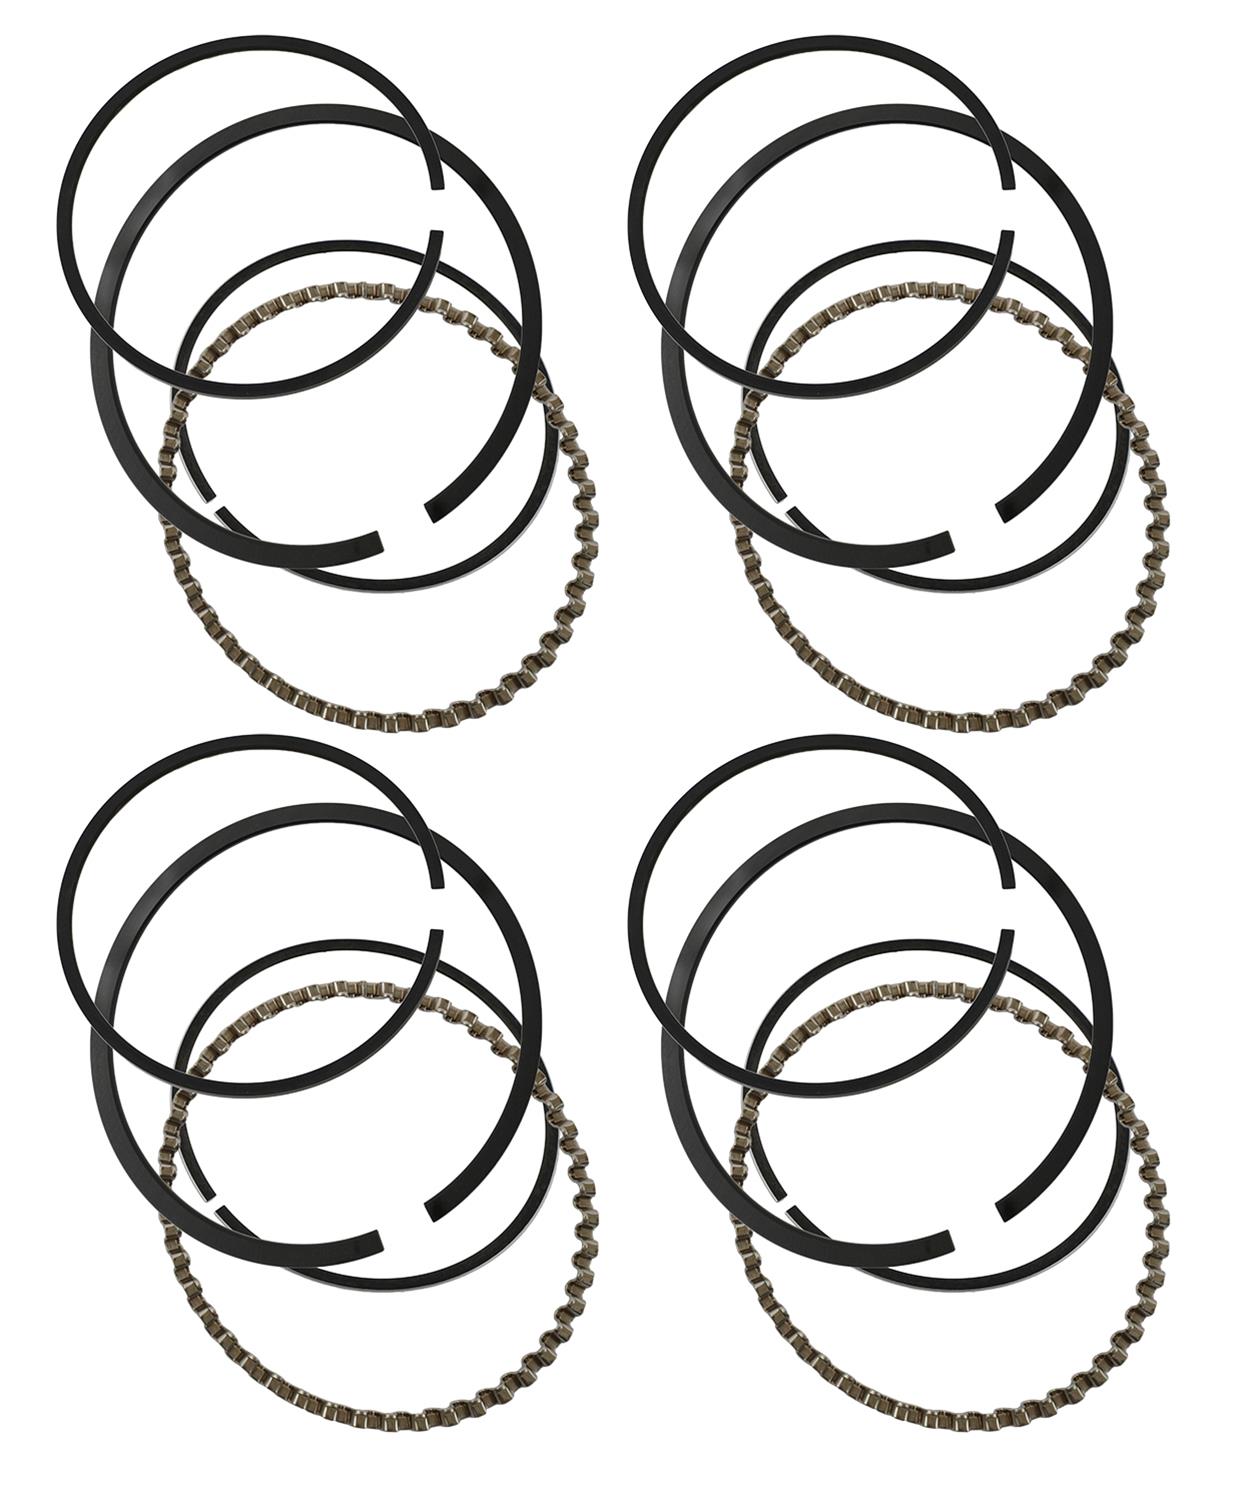 Hastings 4450030 6-Cylinder Piston Ring Set 